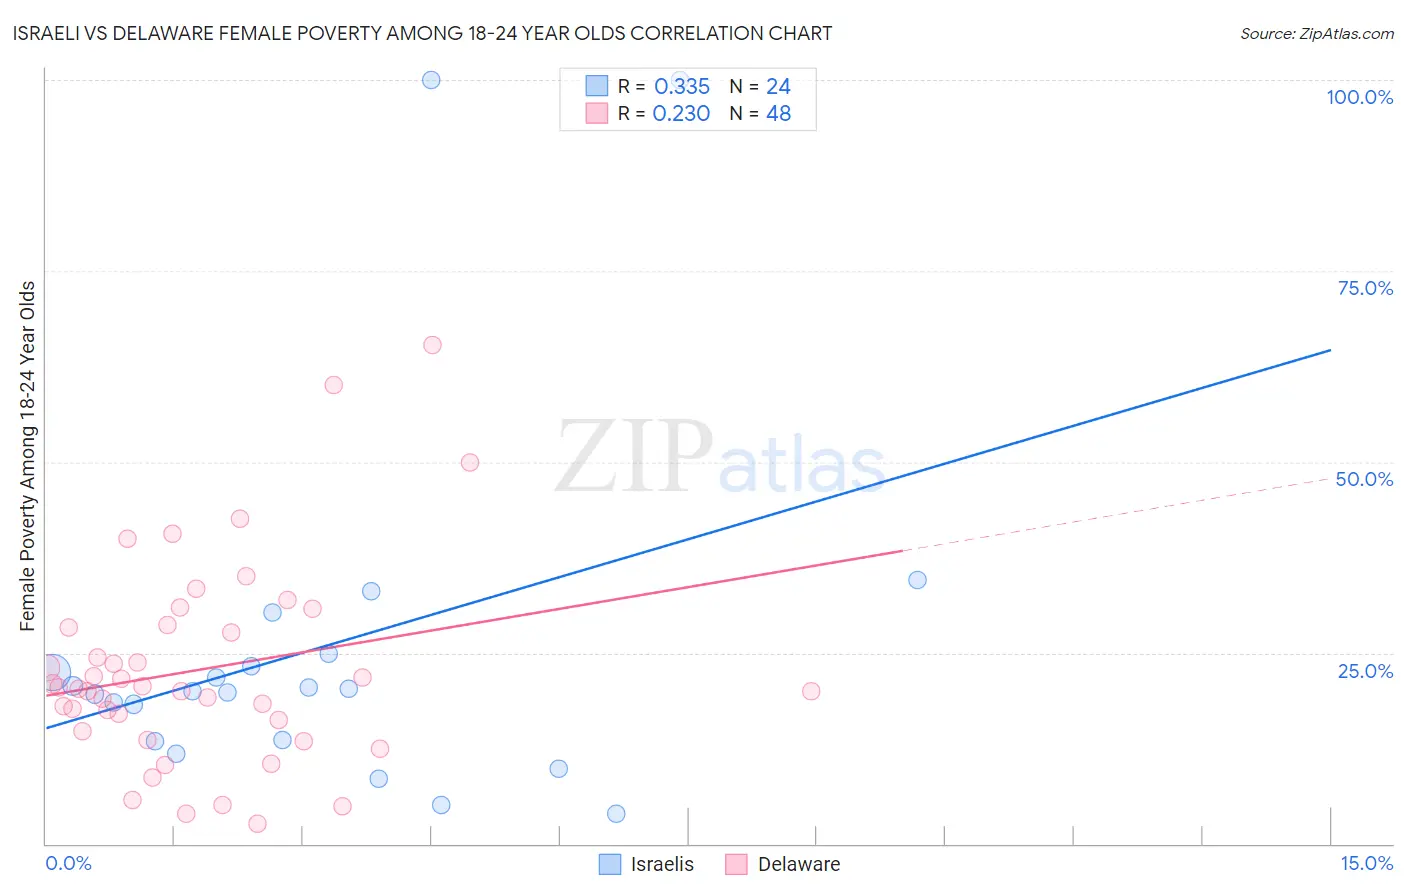 Israeli vs Delaware Female Poverty Among 18-24 Year Olds